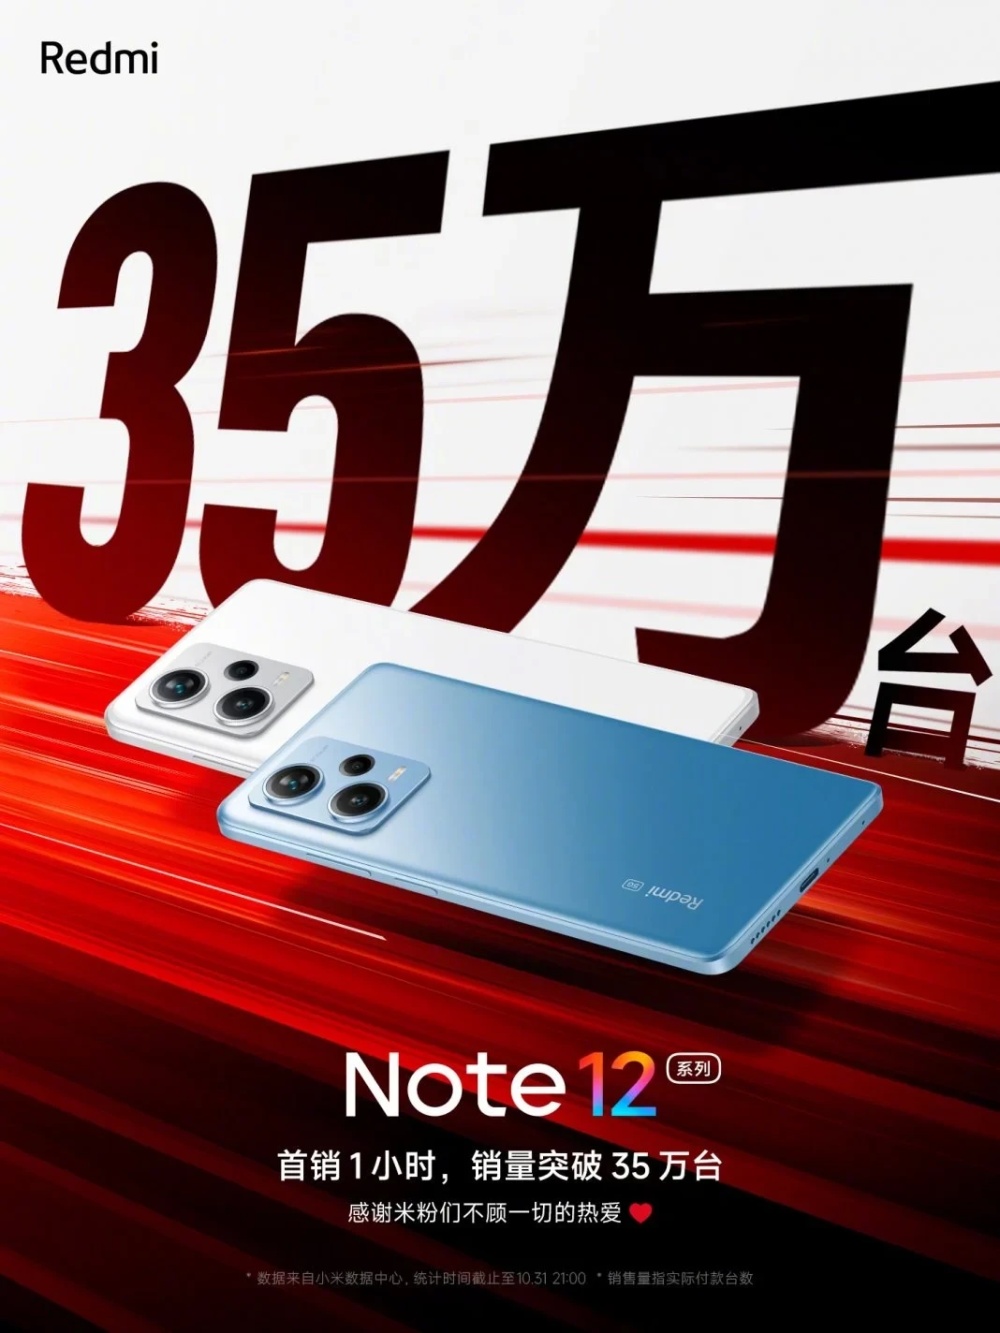 Redmi за одну минуту продала более 350 000 смартфонов серии Note 12